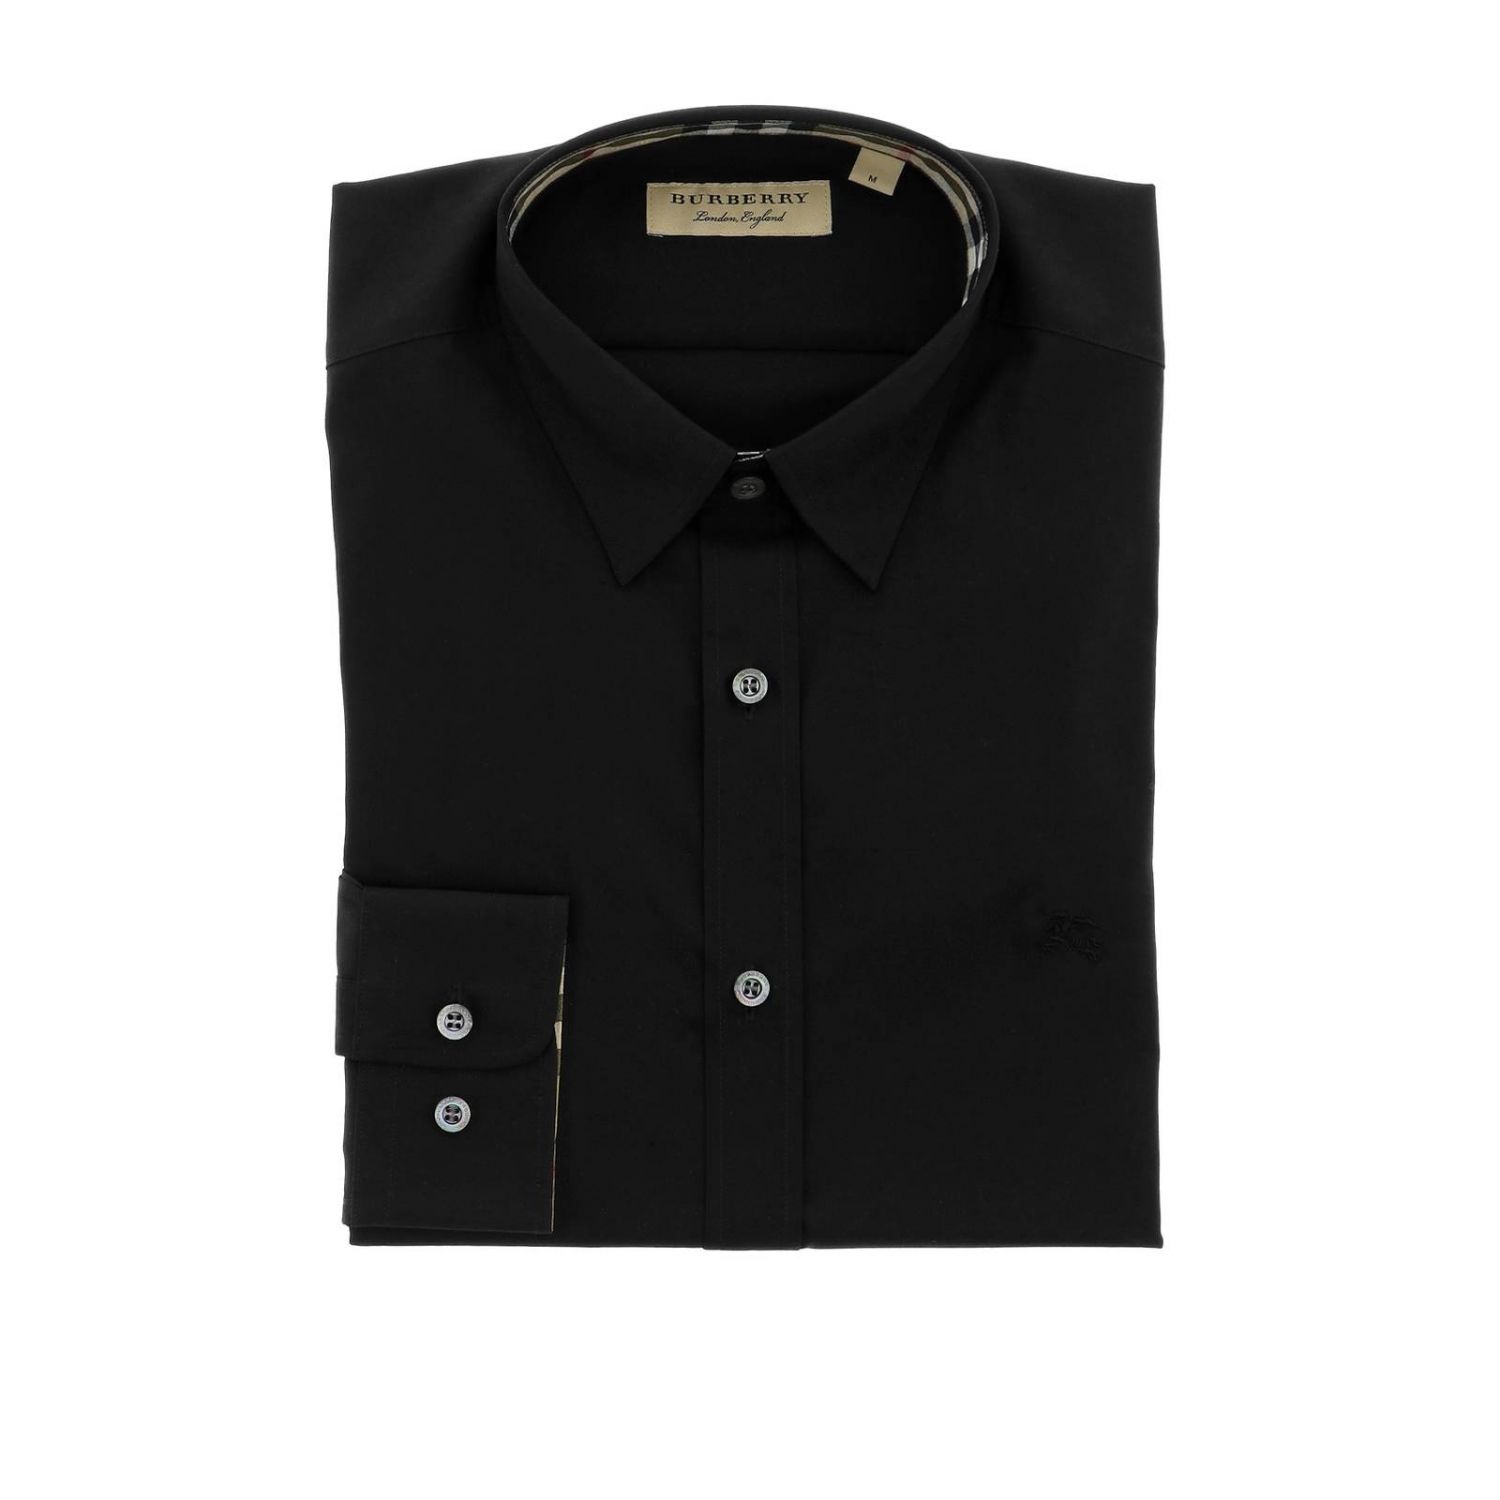 Shirt men Burberry | Shirt Burberry Men Black | Shirt Burberry 8003074 ...